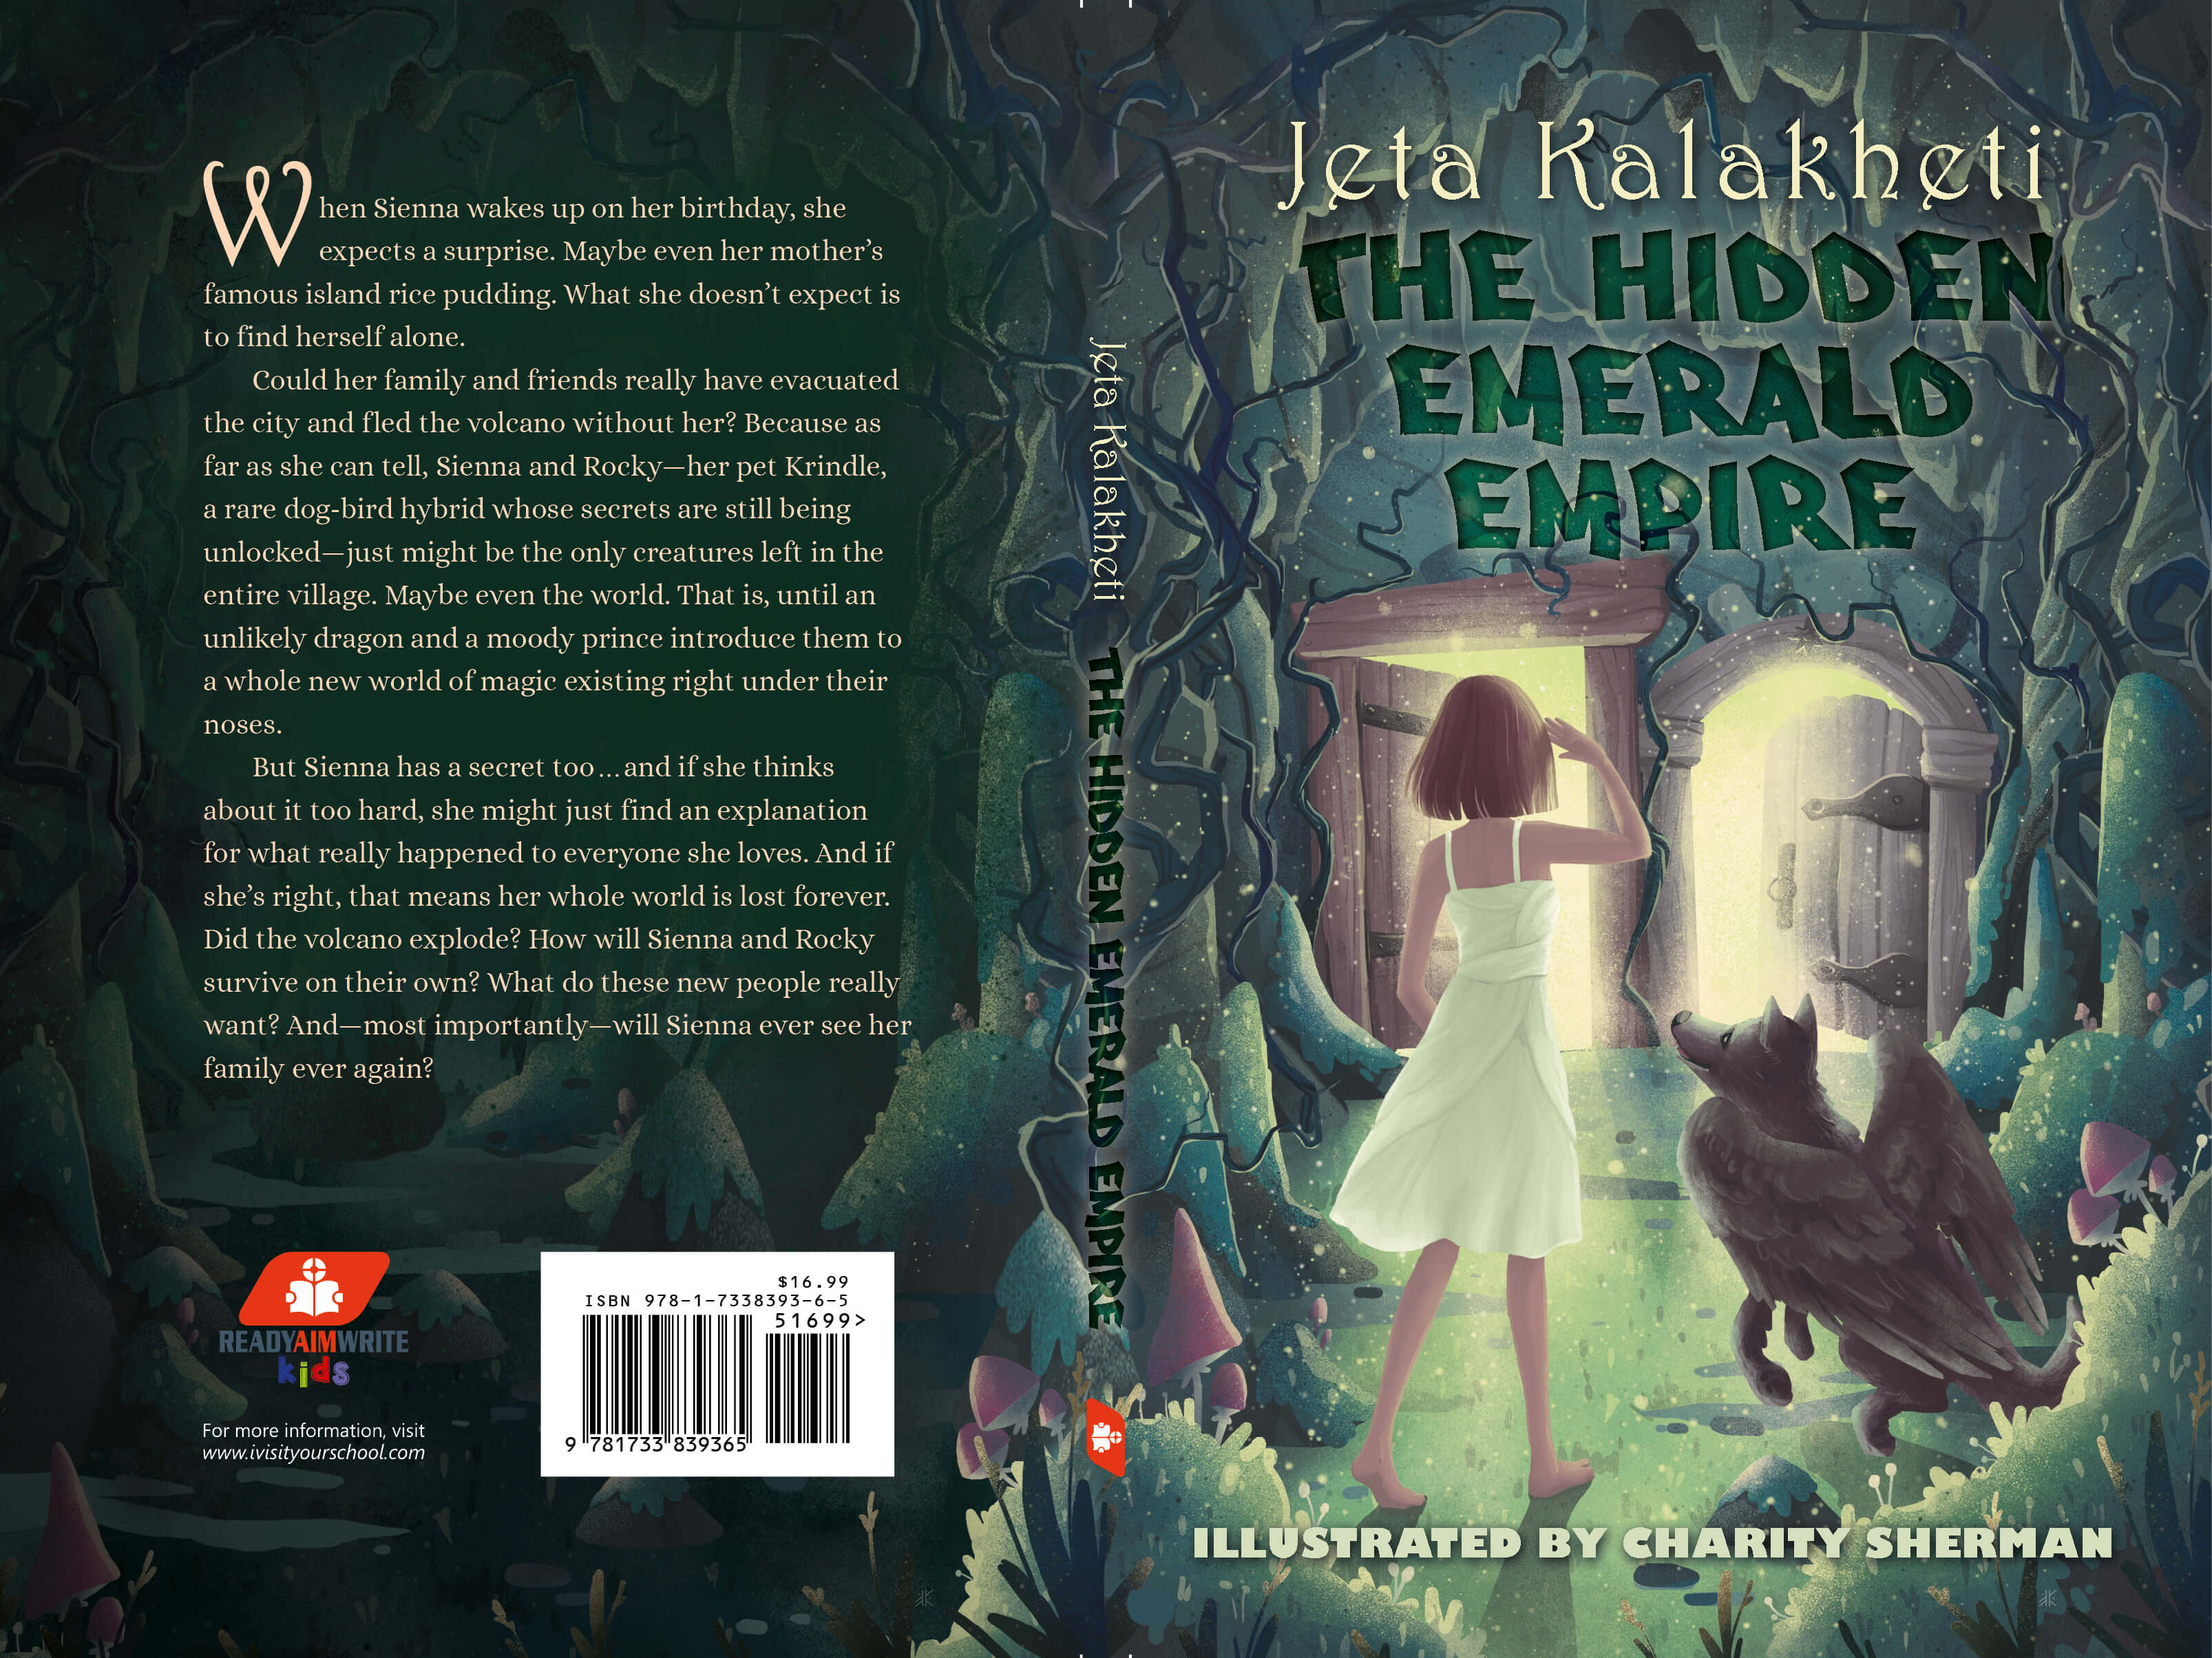 The Hidden Emerald Empire JPG